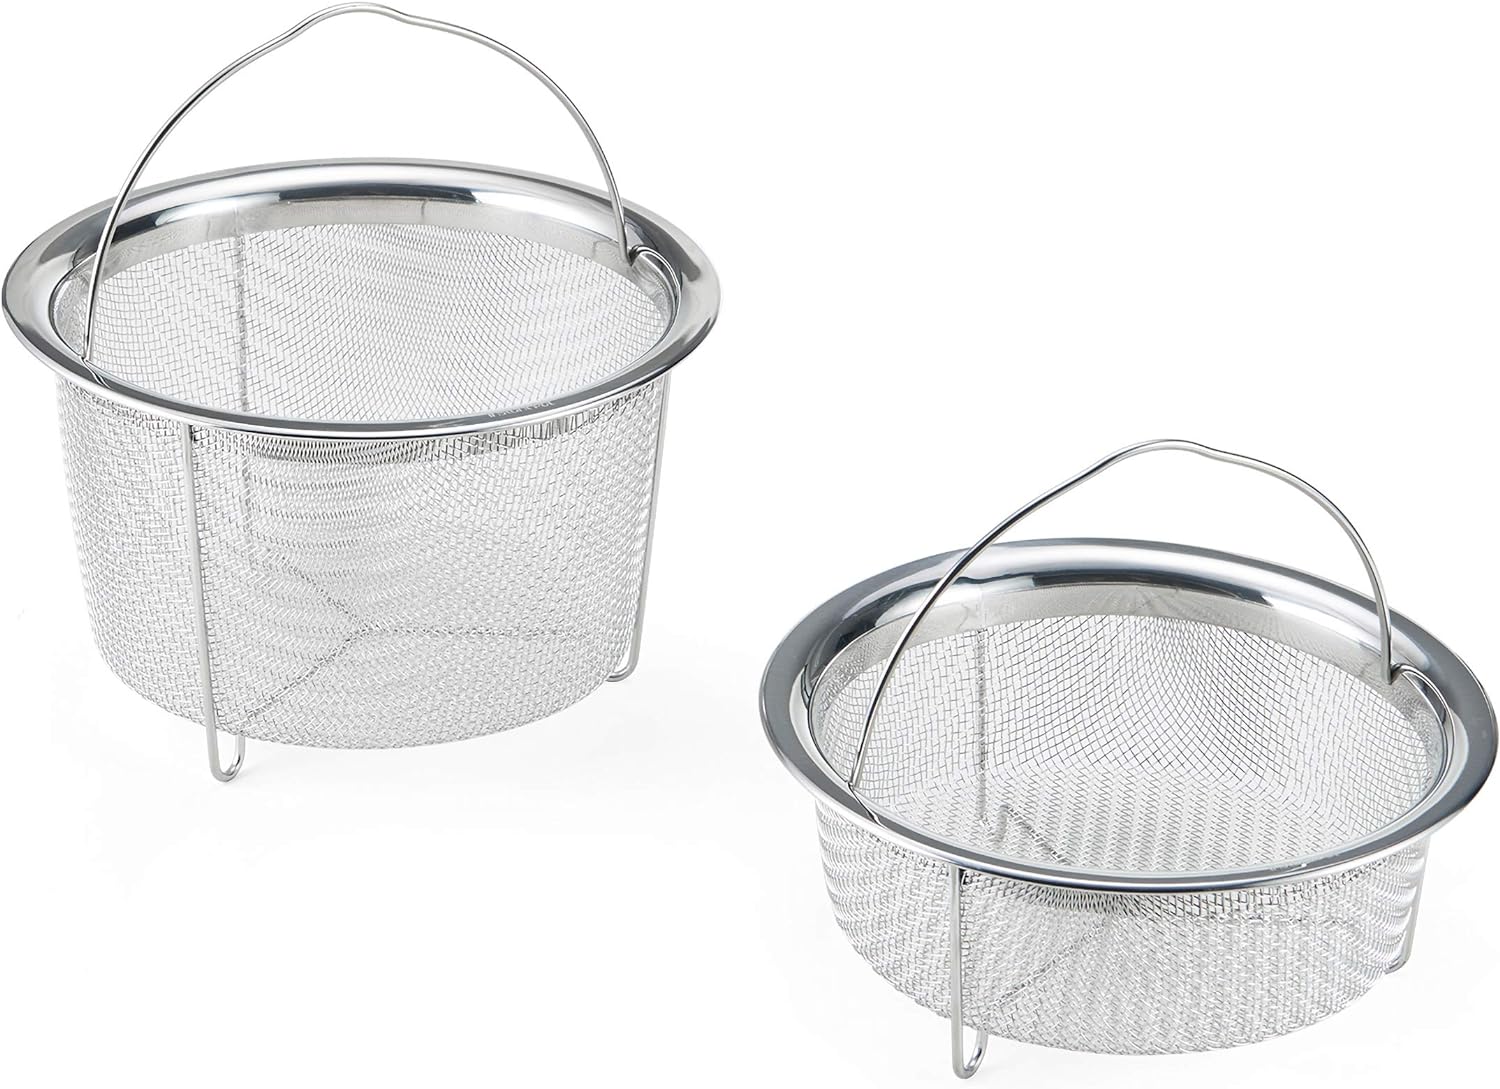 Lifetime Brands Instant Pot Official Mesh Steamer Basket, Set of 2, Stainless Steel